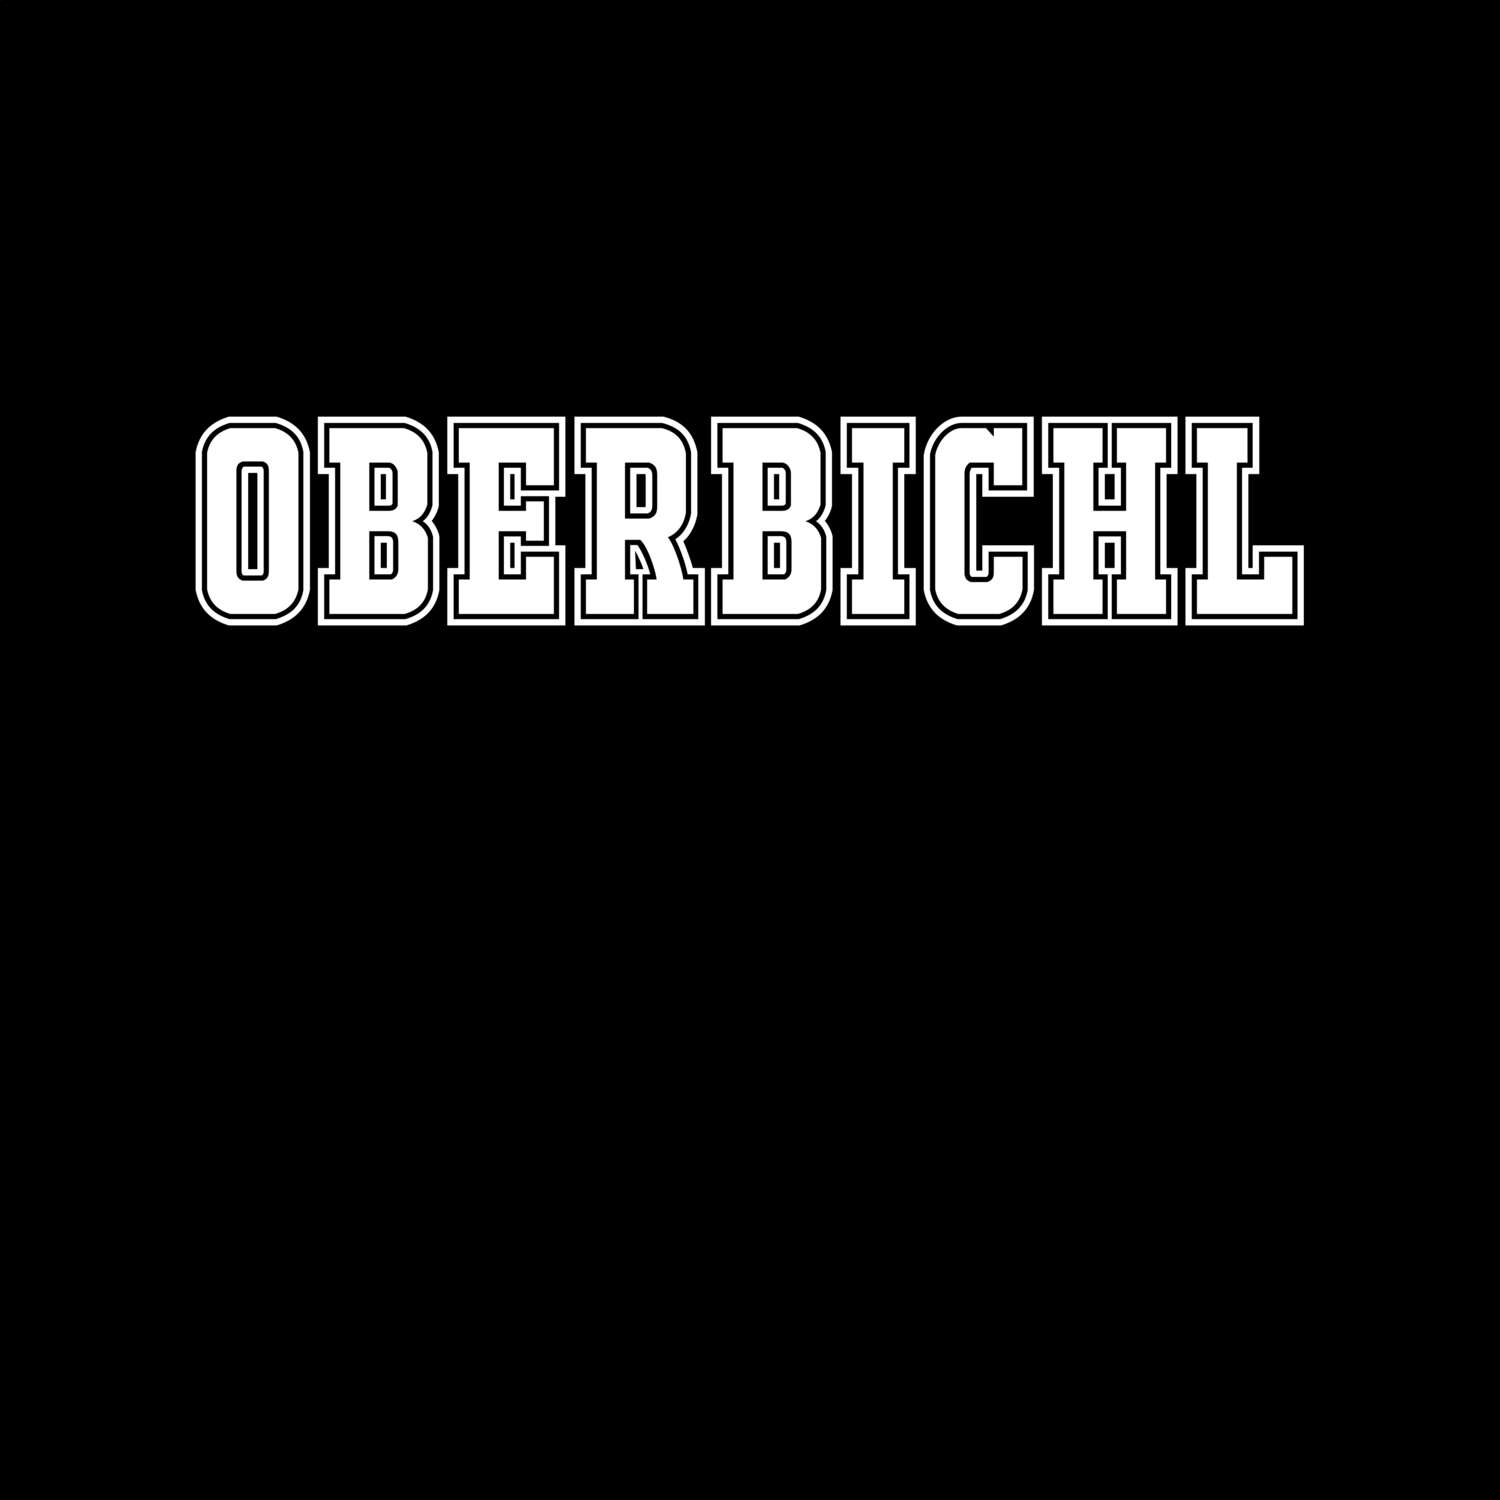 Oberbichl T-Shirt »Classic«